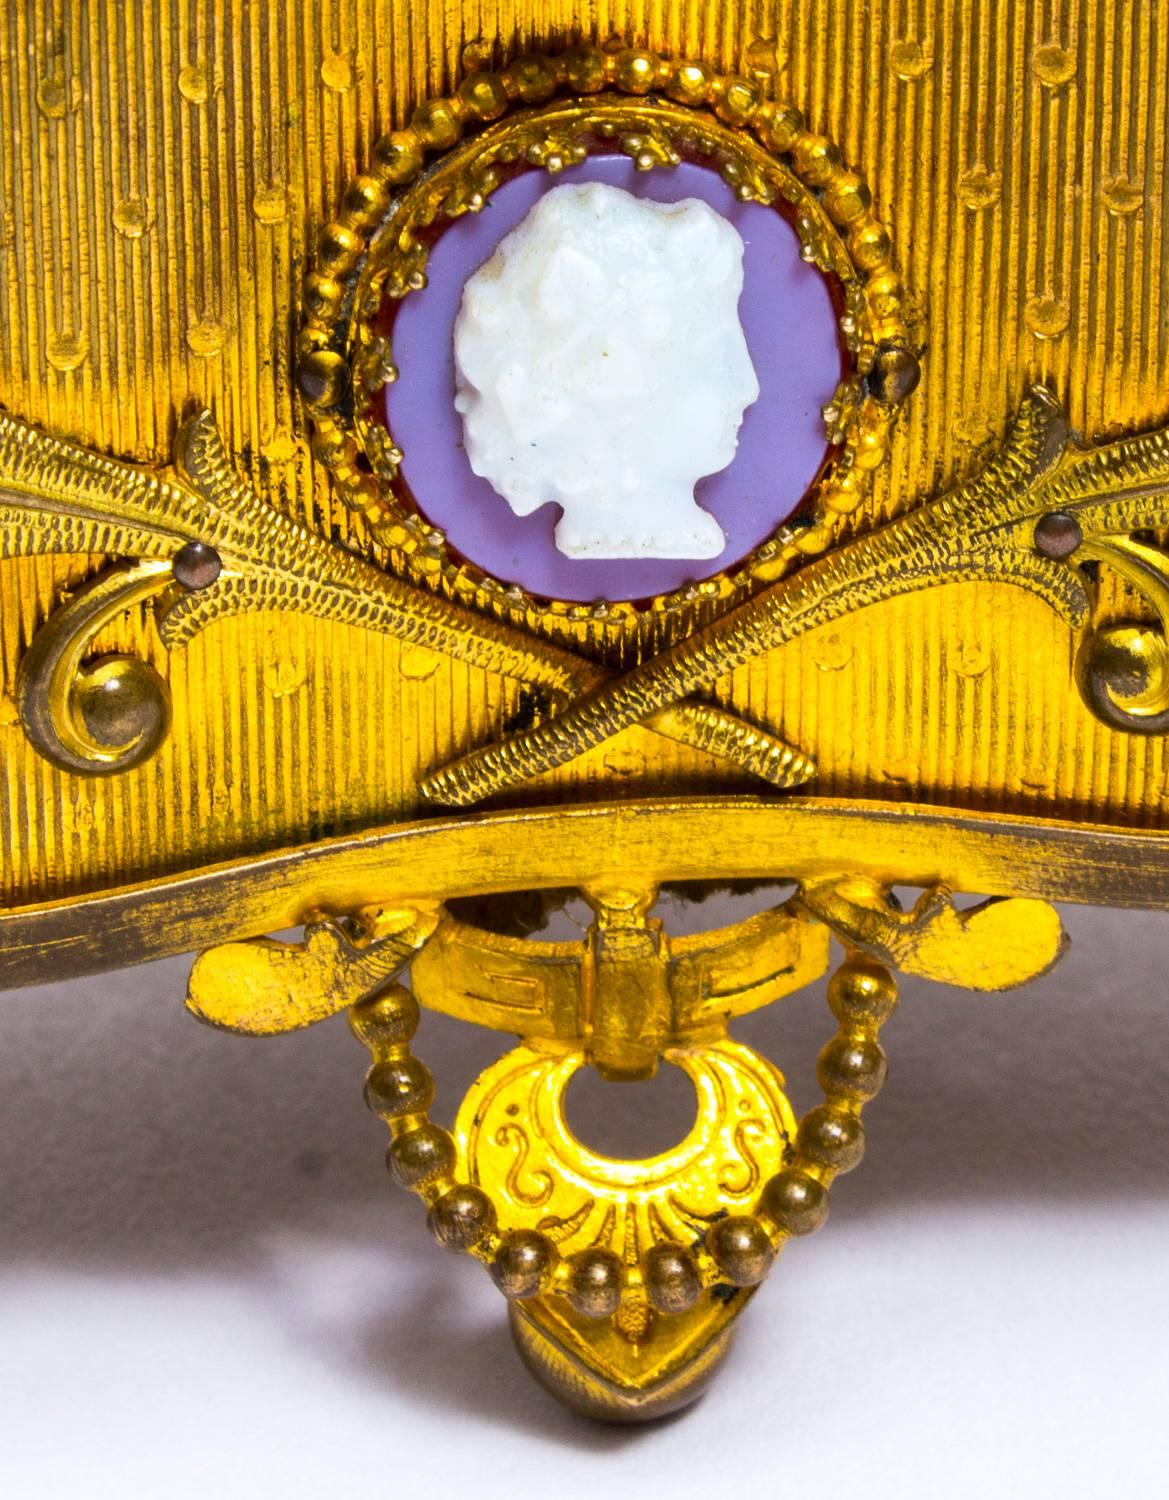 Ormolu 19th Century French Gilt Bronze Jewelry Casket with Cameos